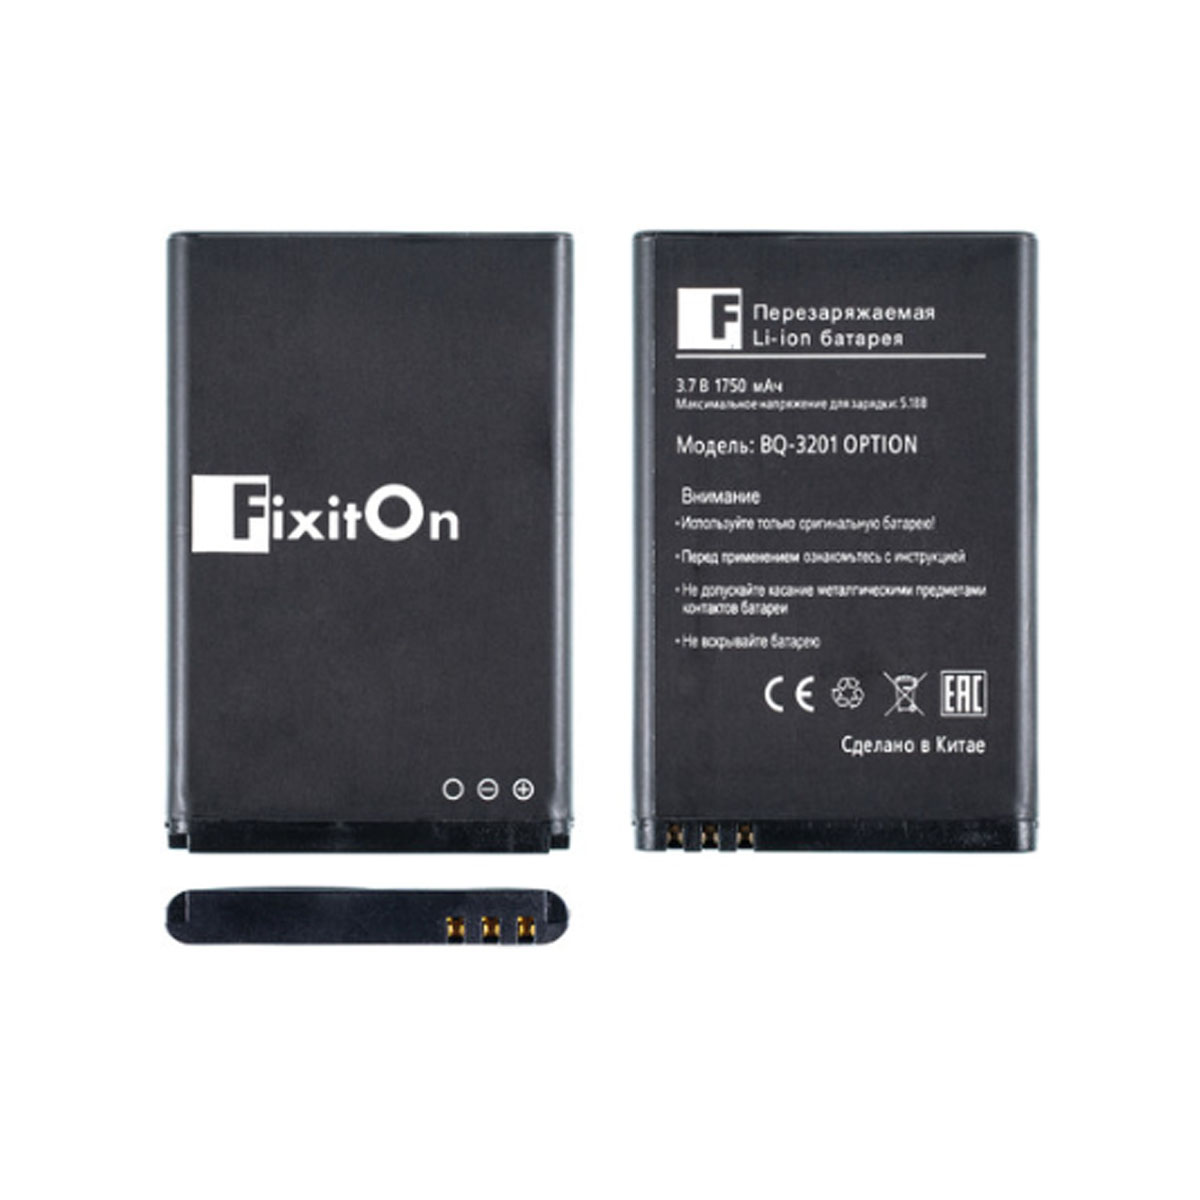 АКБ (Аккумулятор) FixitOn для BQ-3201 OPTION, 1750mAh, 3.7V